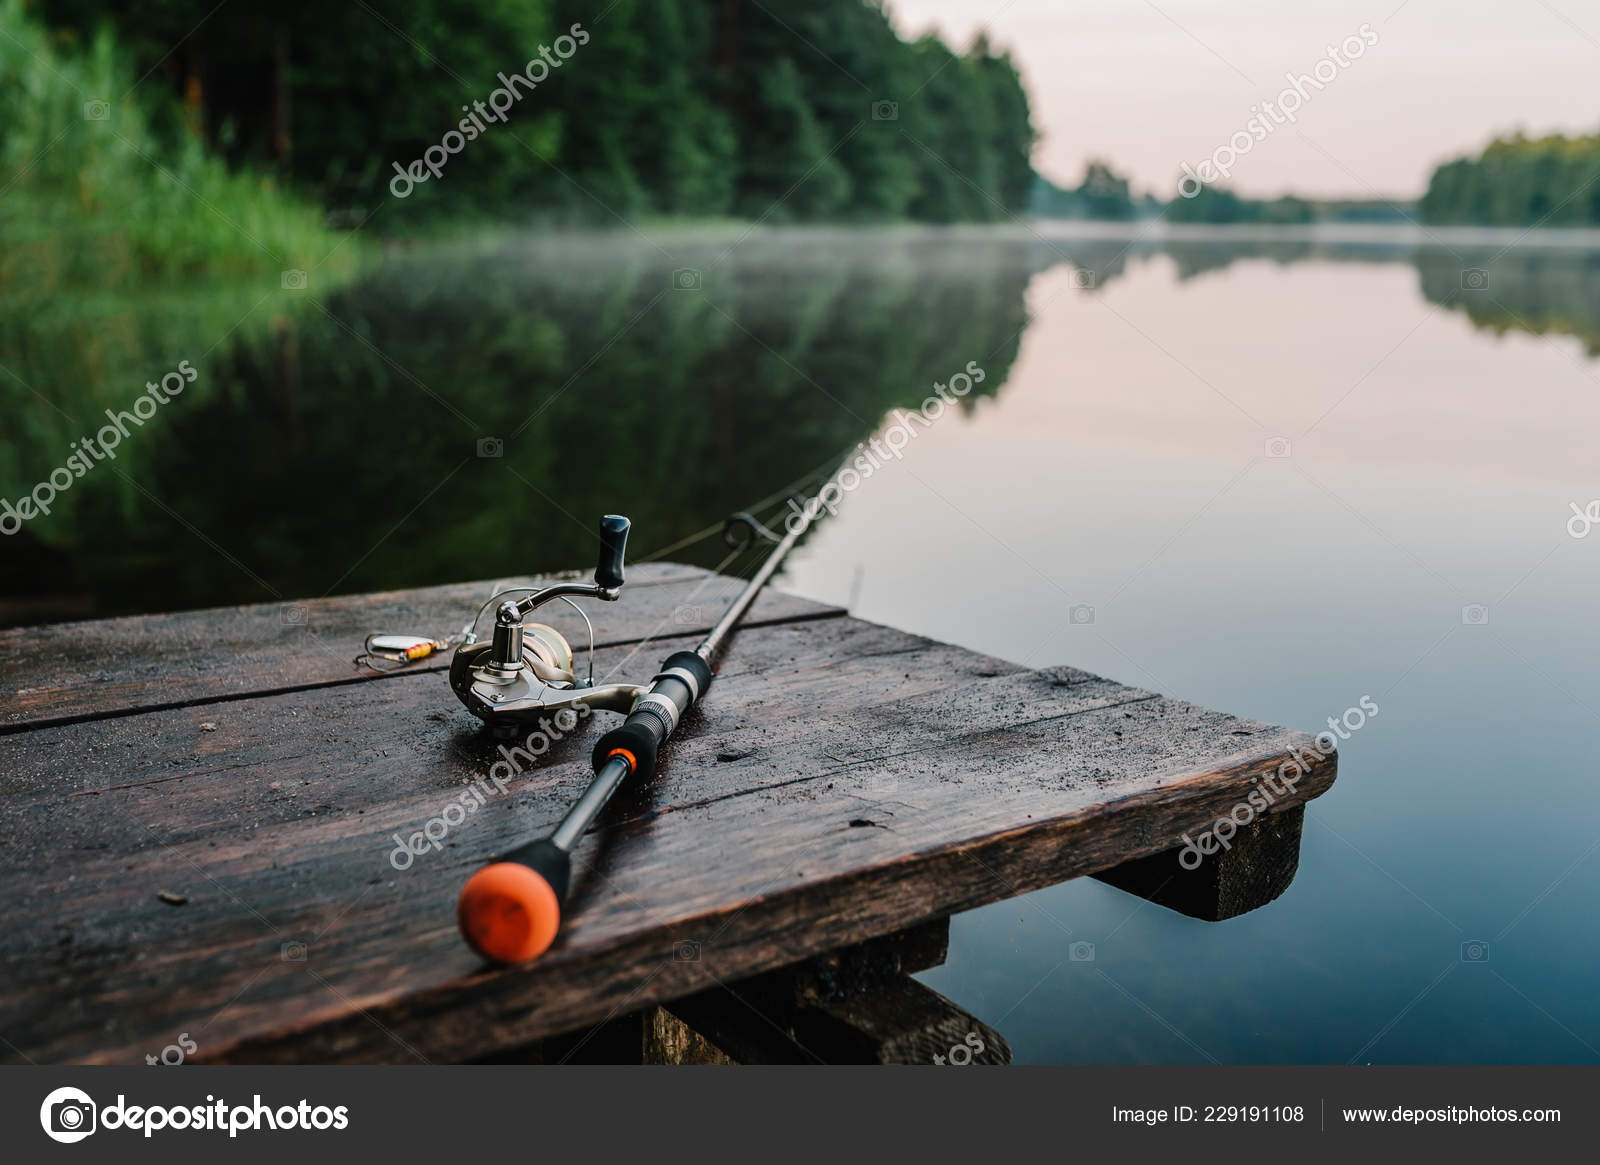 https://st4.depositphotos.com/21188836/22919/i/1600/depositphotos_229191108-stock-photo-fishing-rod-spinning-reel-background.jpg